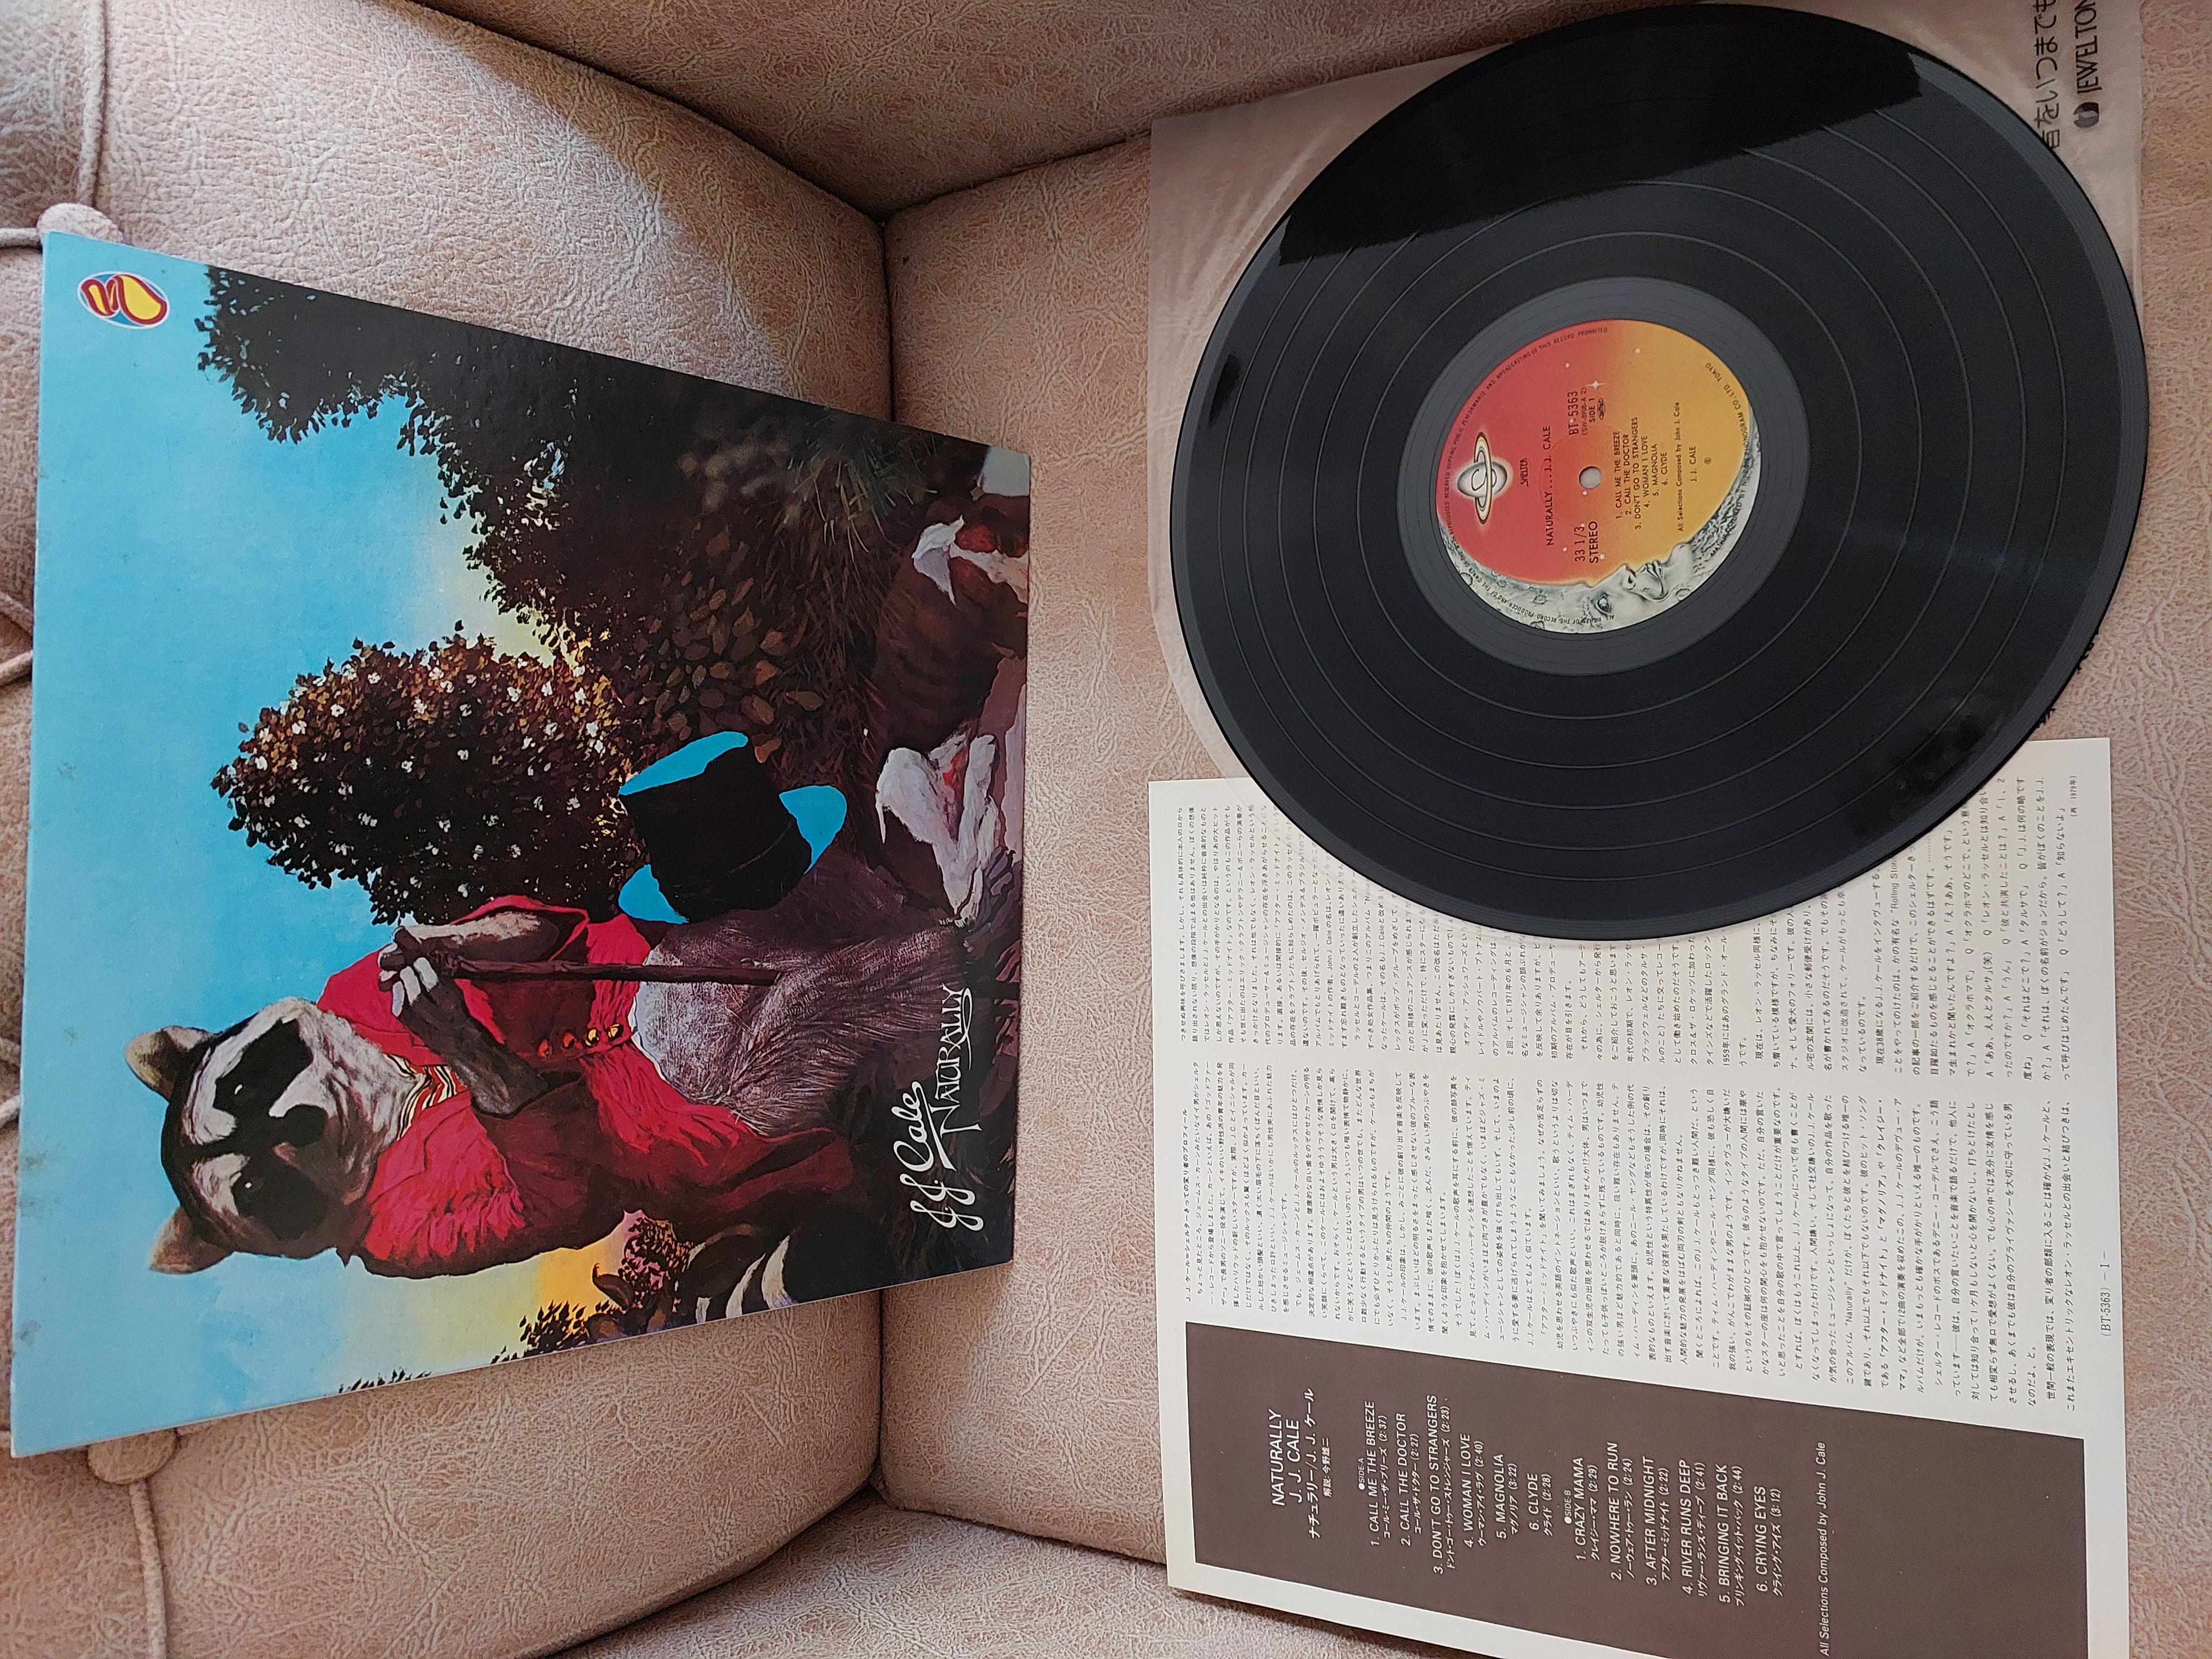 J.J. Cale – Naturally - 1979 Japonya Basım 33 Lük Plak LP Albüm